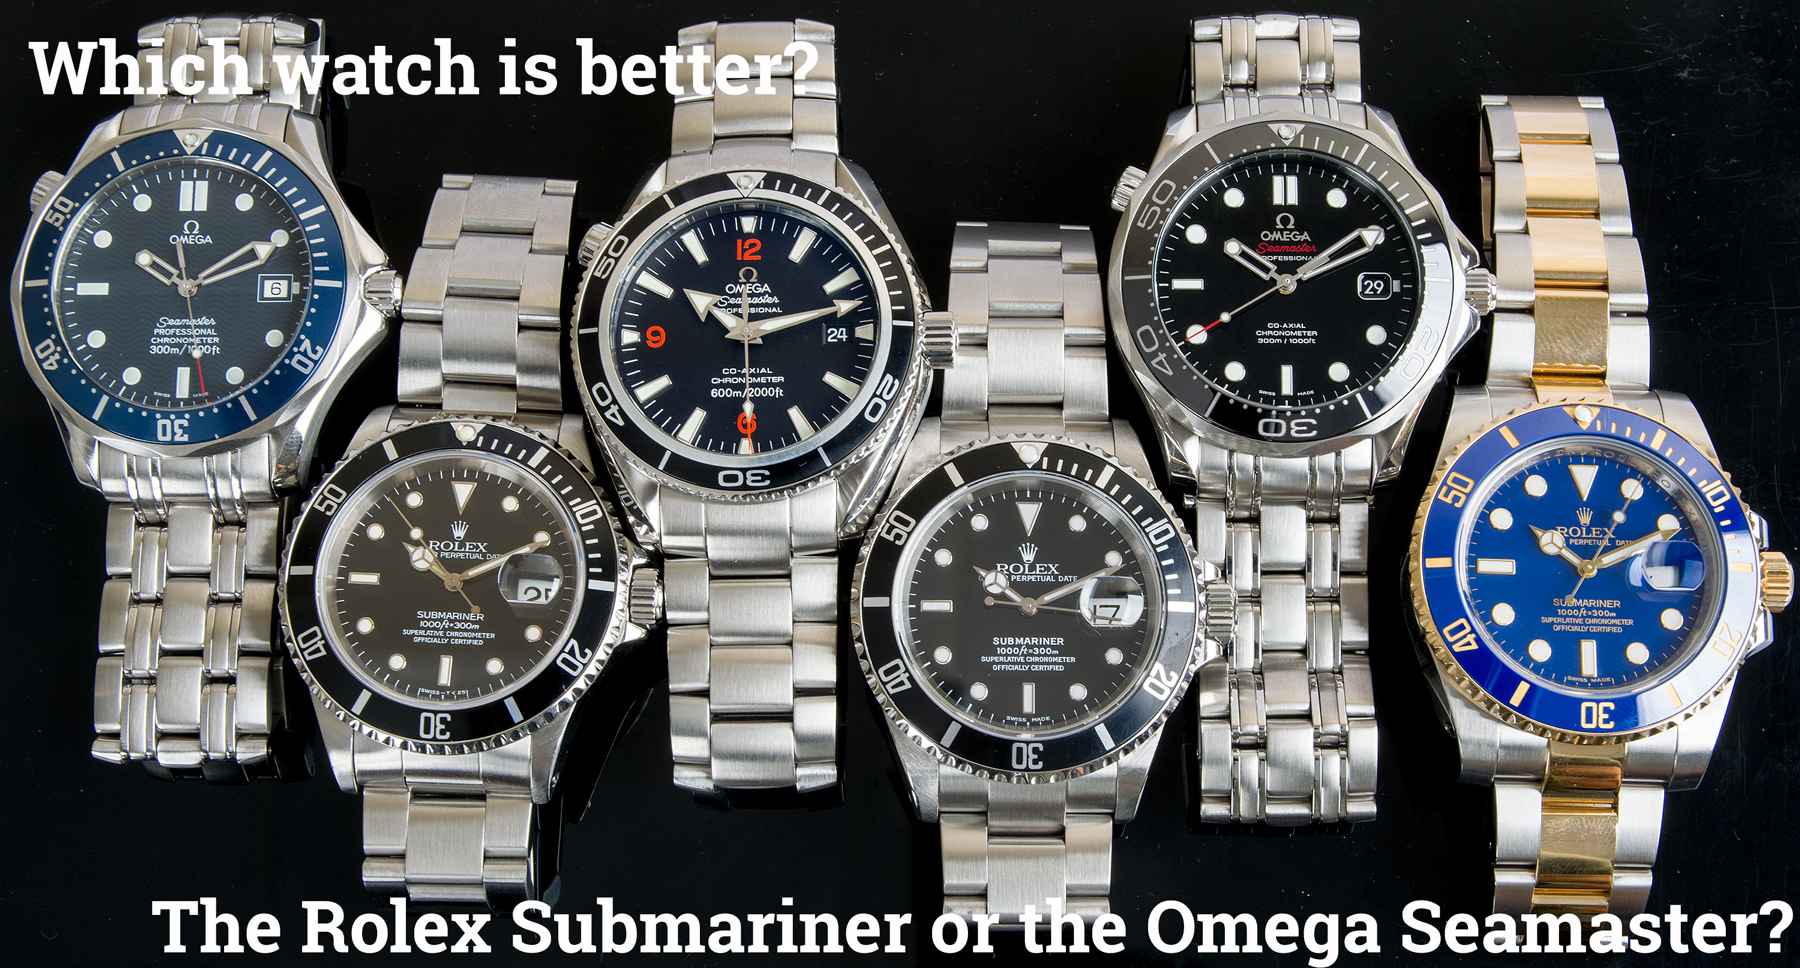 rolex submariner vs seamaster